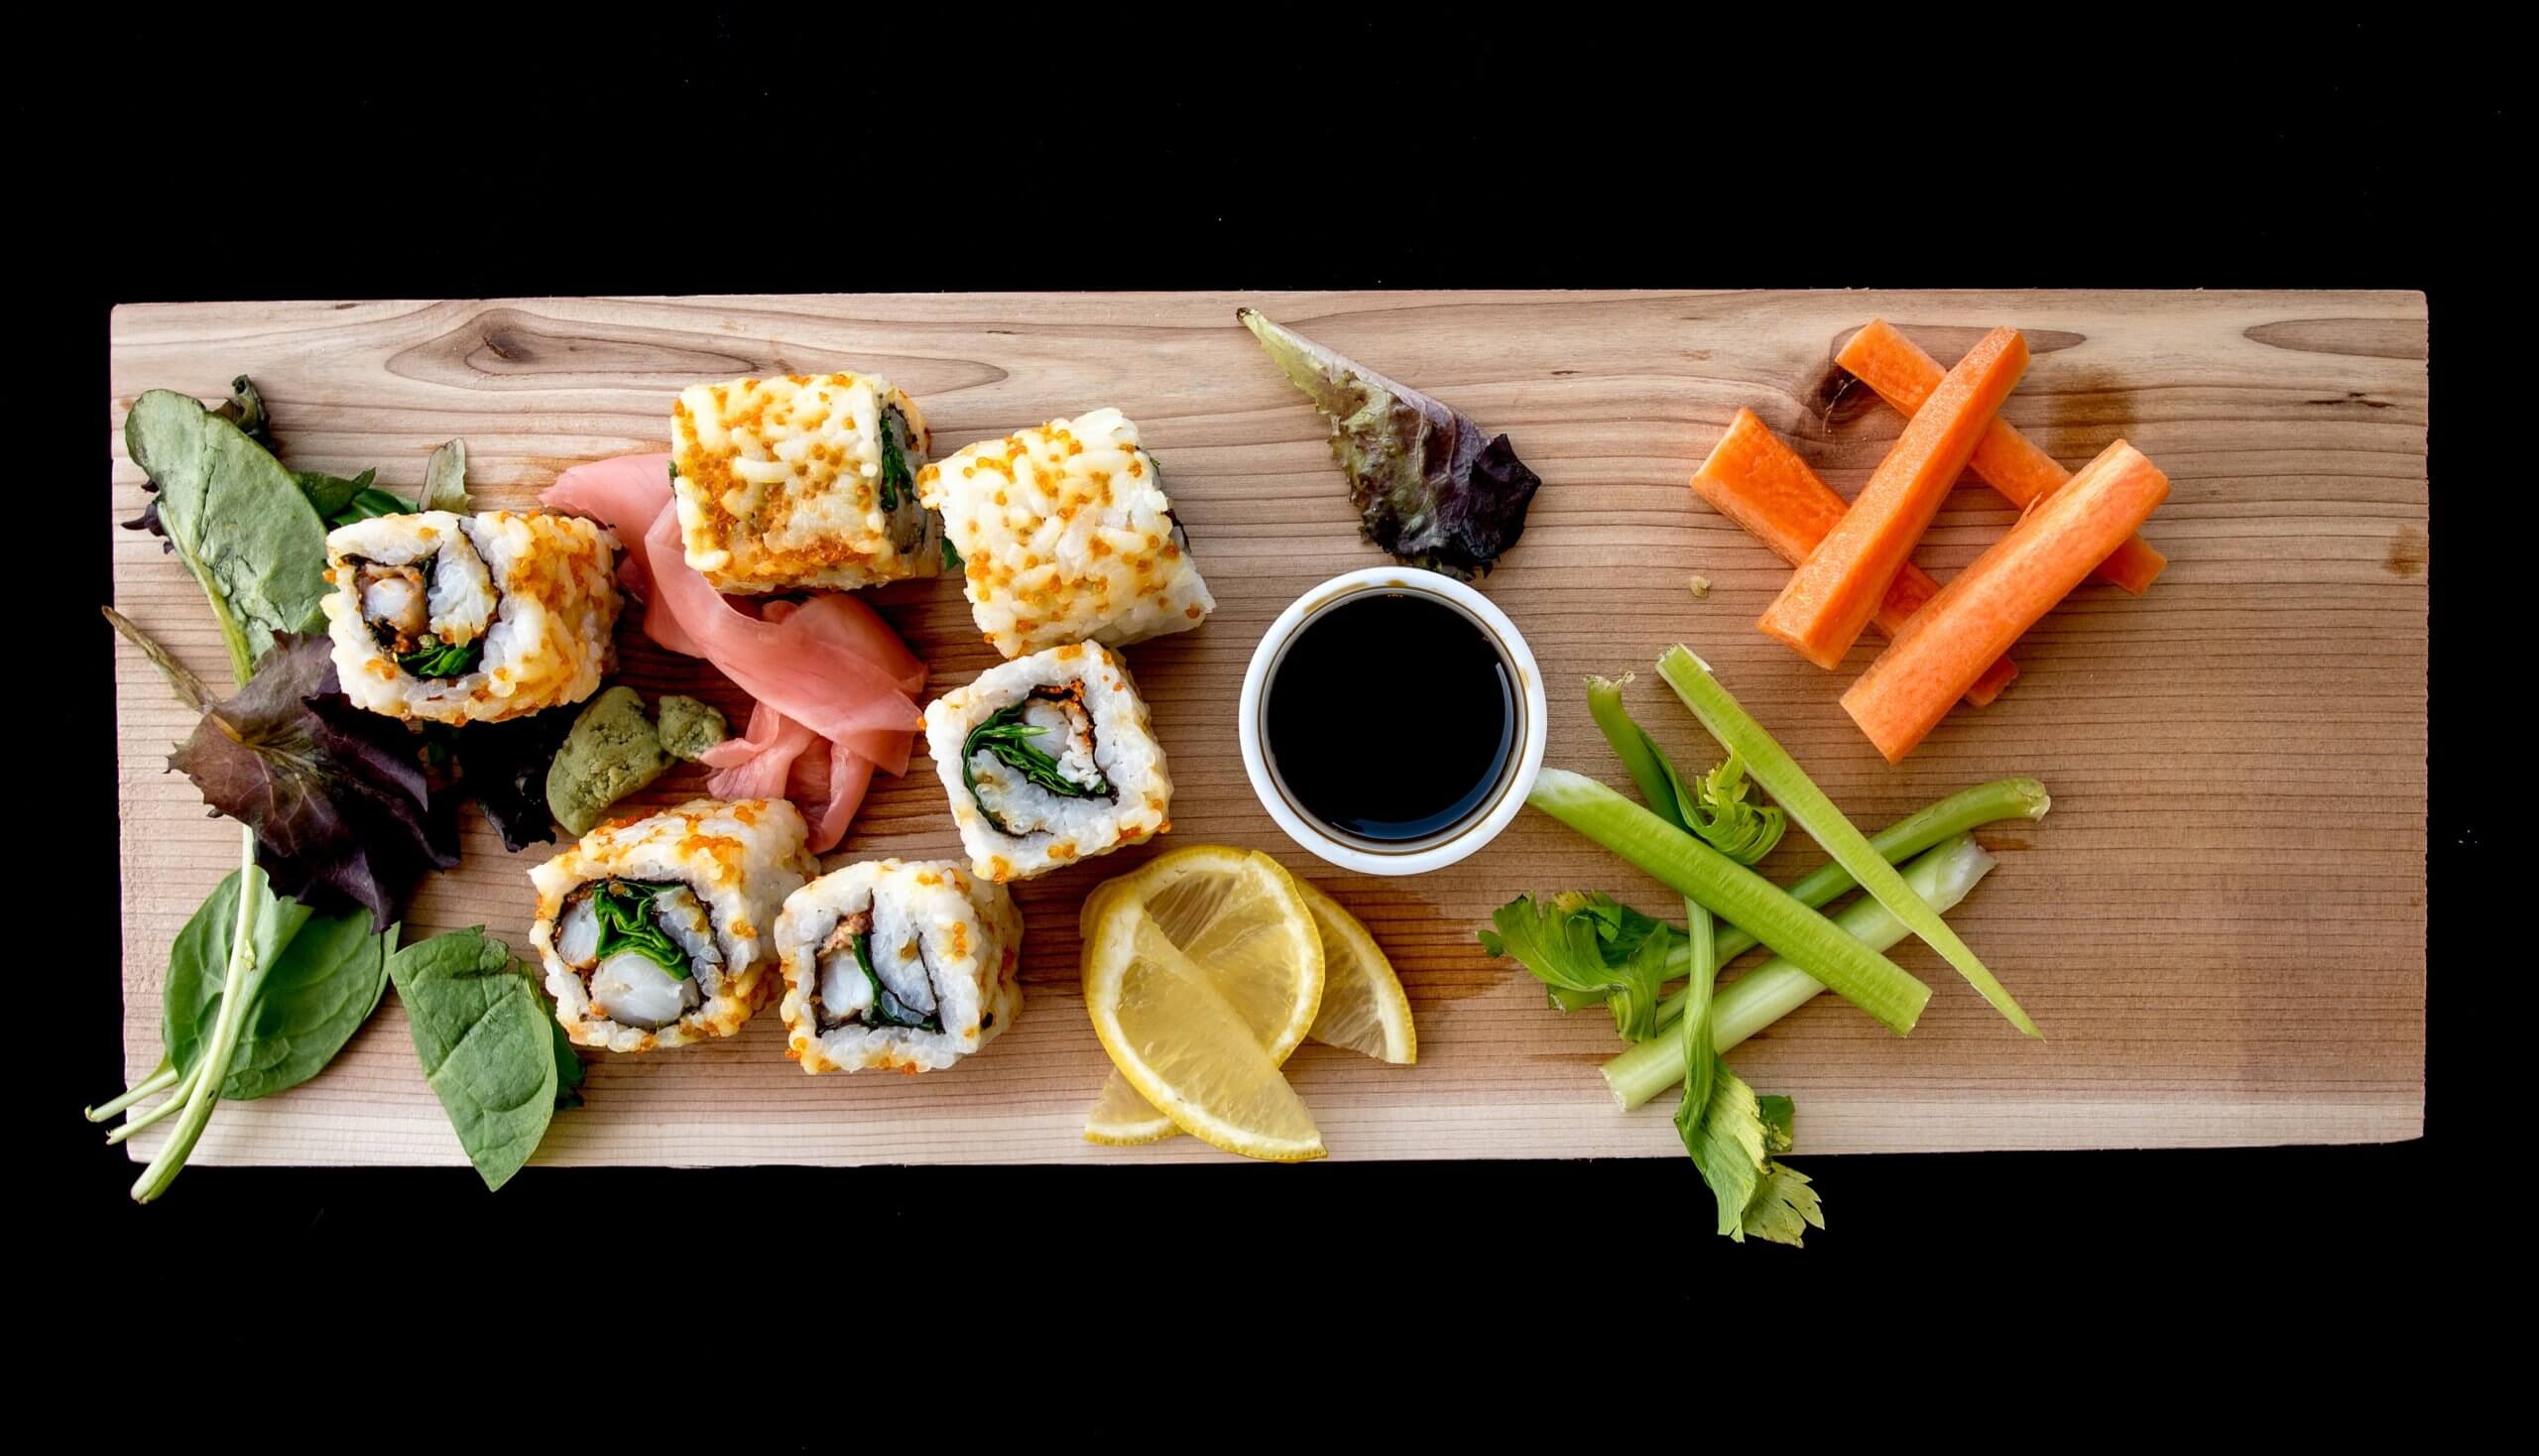 More sushi, less calories!